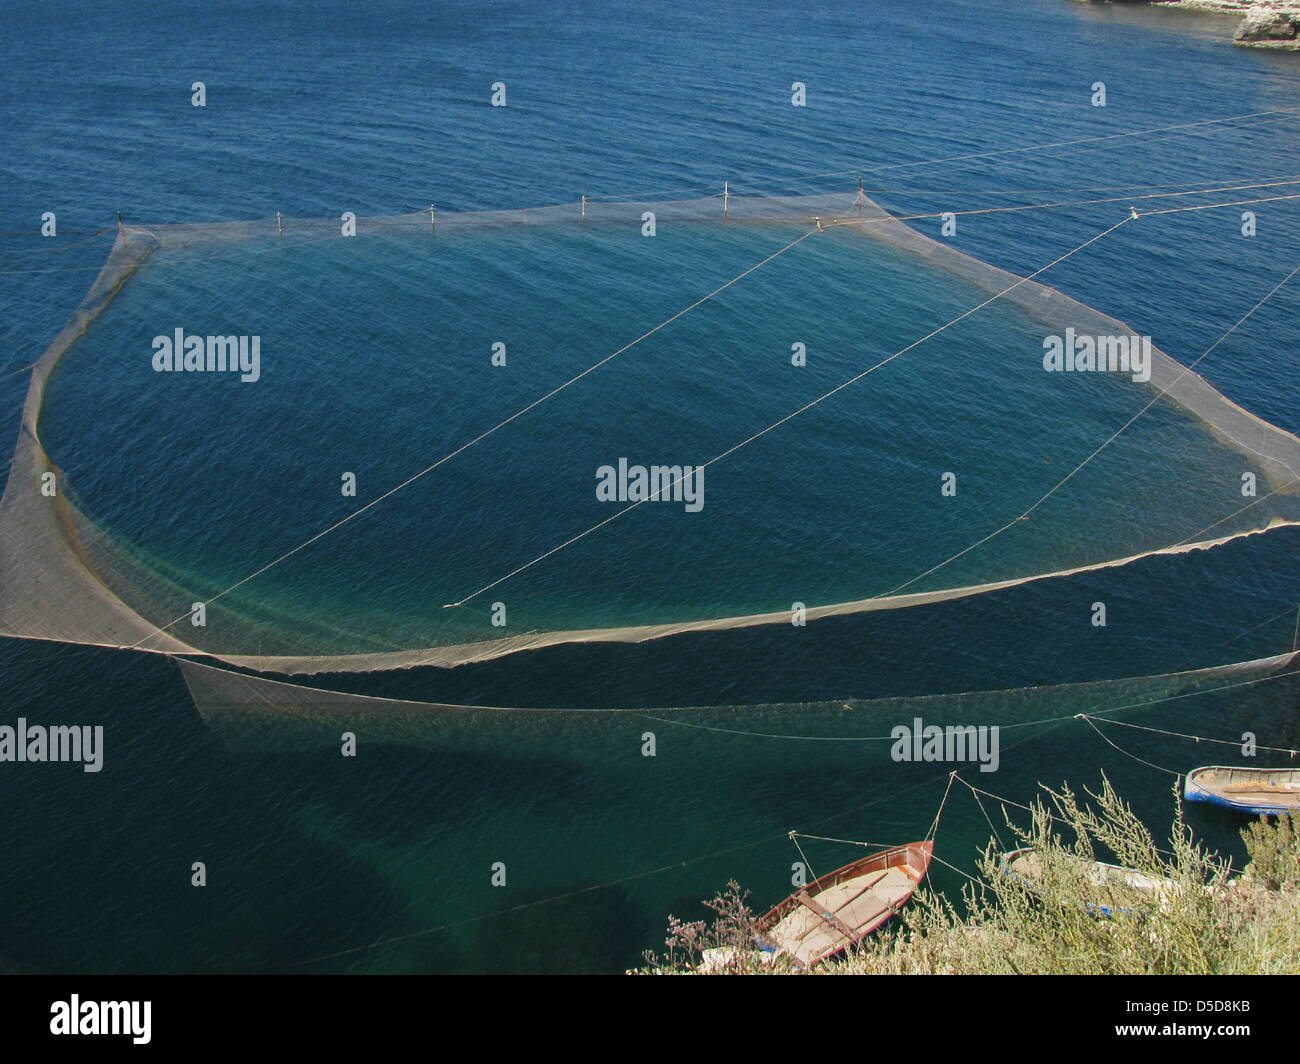 https://c8.alamy.com/comp/D5D8KB/huge-fishing-net-in-sea-near-coast-D5D8KB.jpg